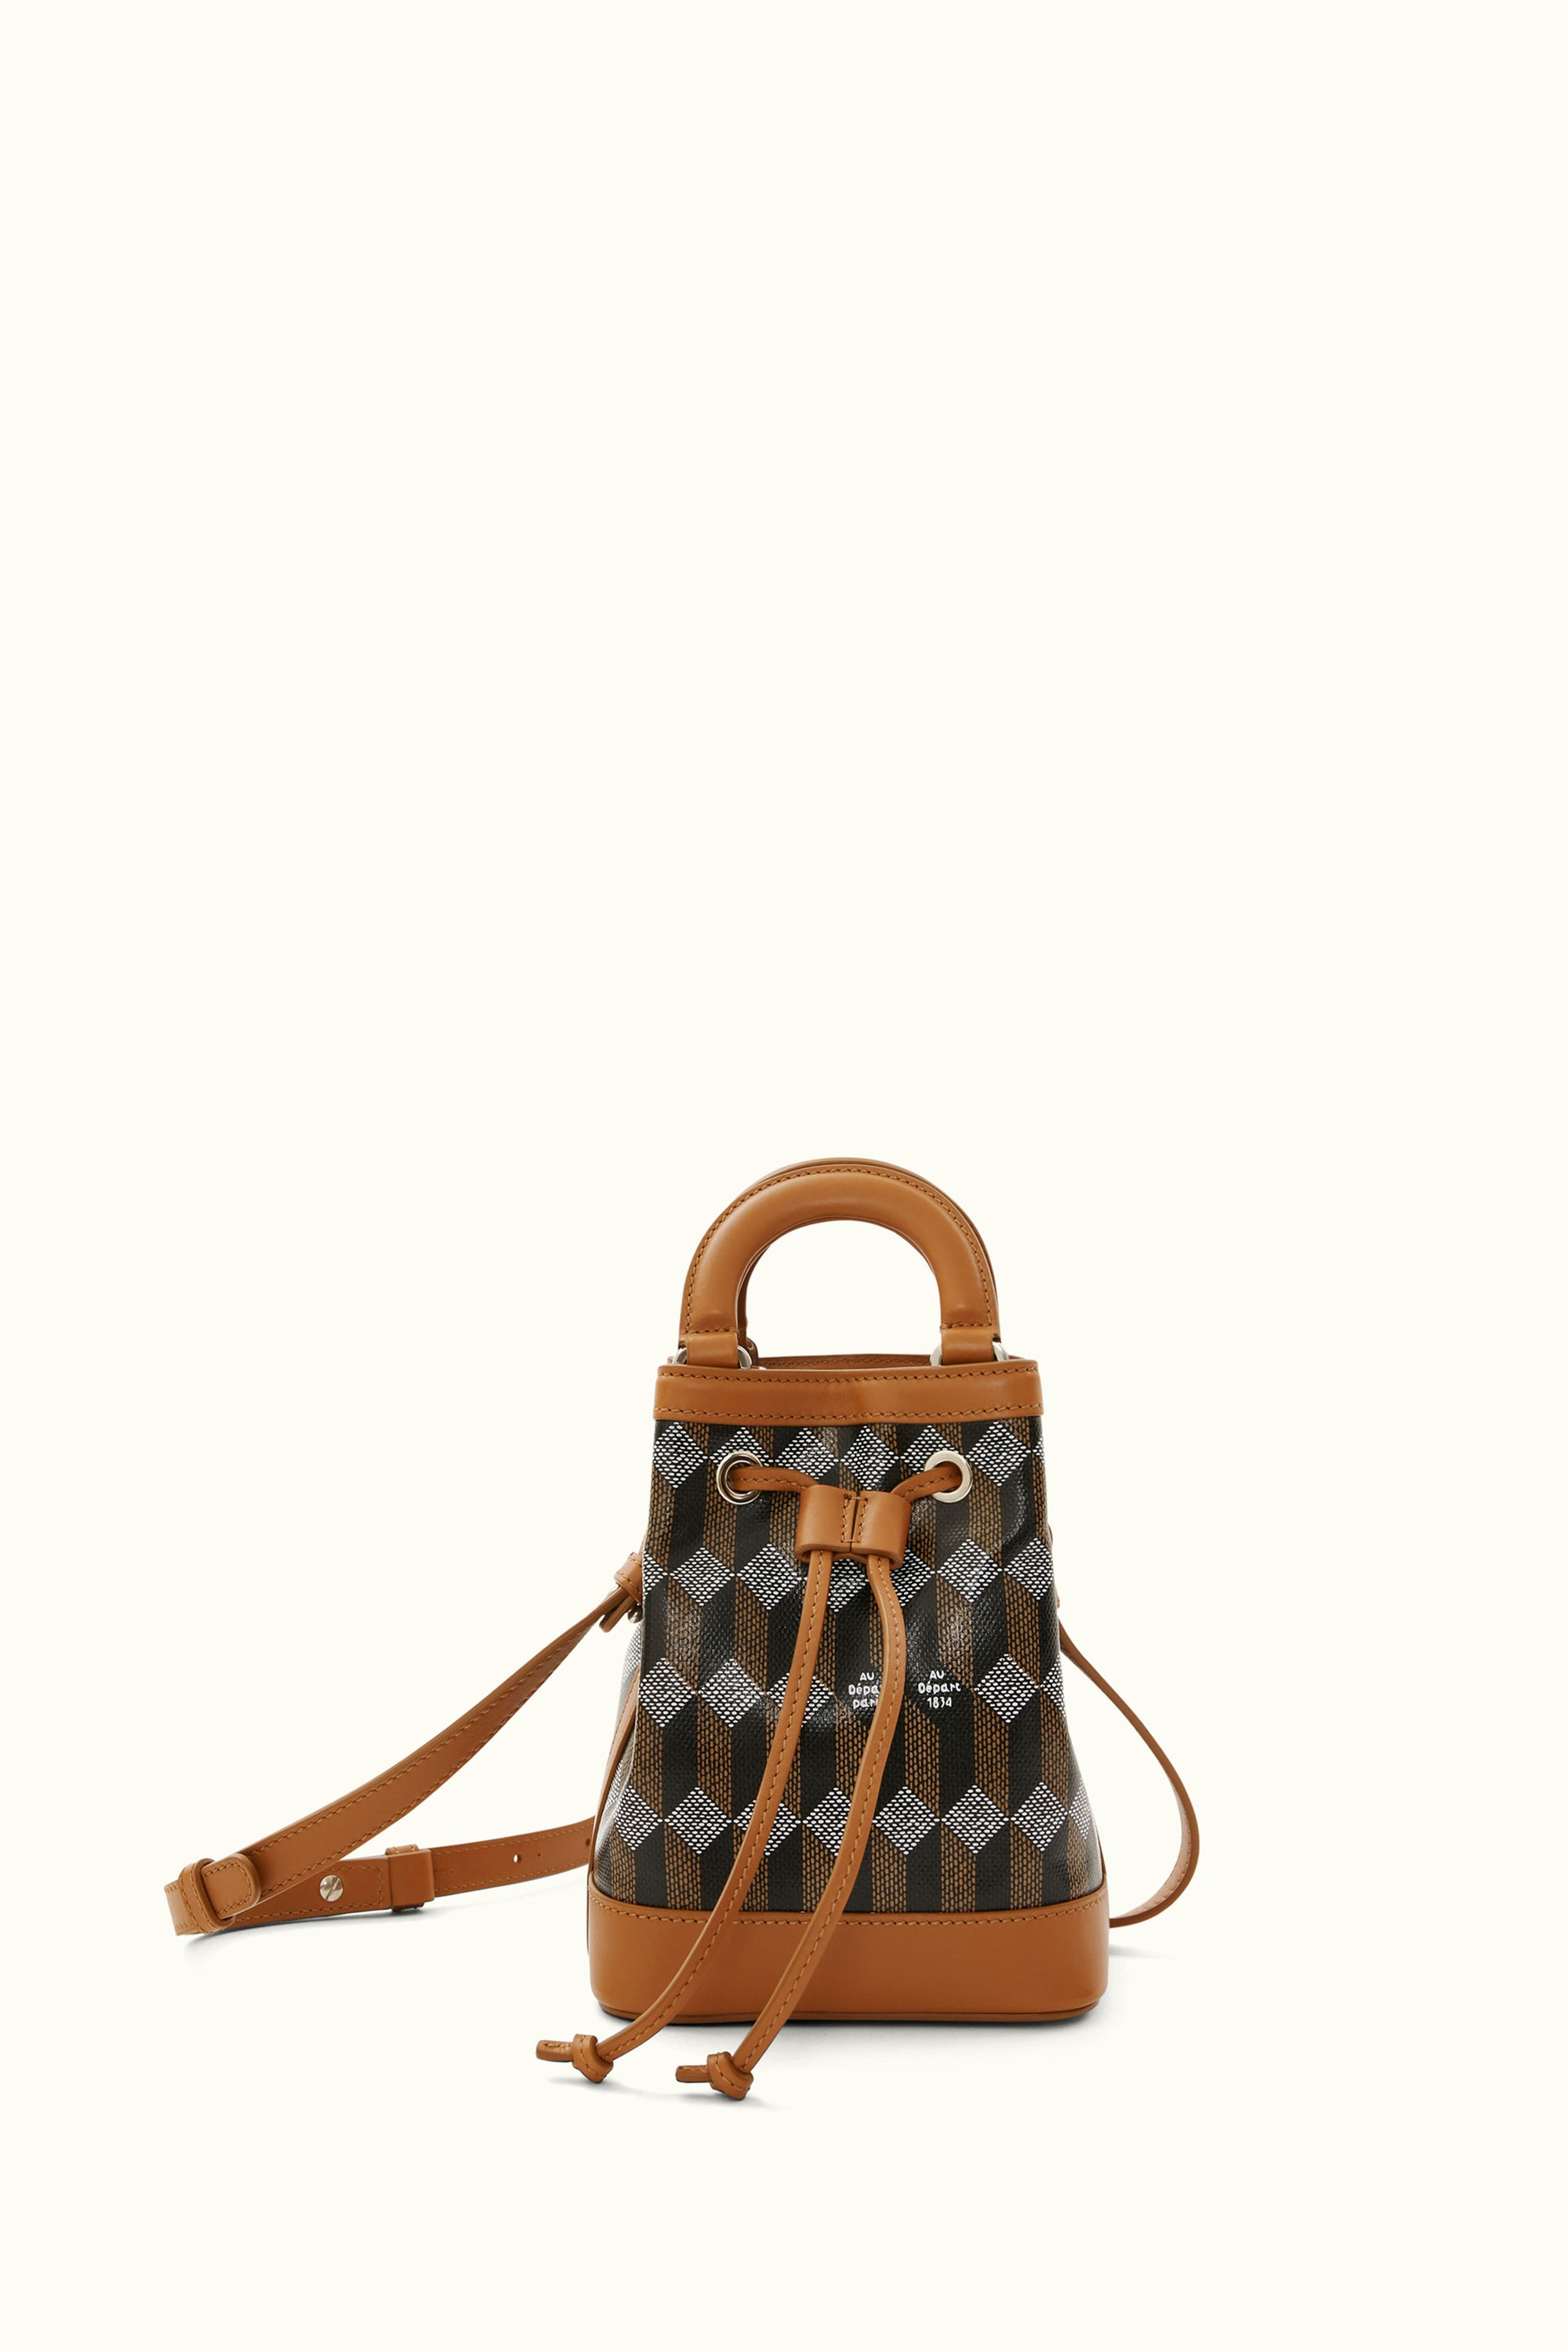 Louis Vuitton Updates Its Monogram Bags with Exotic Trim - PurseBlog